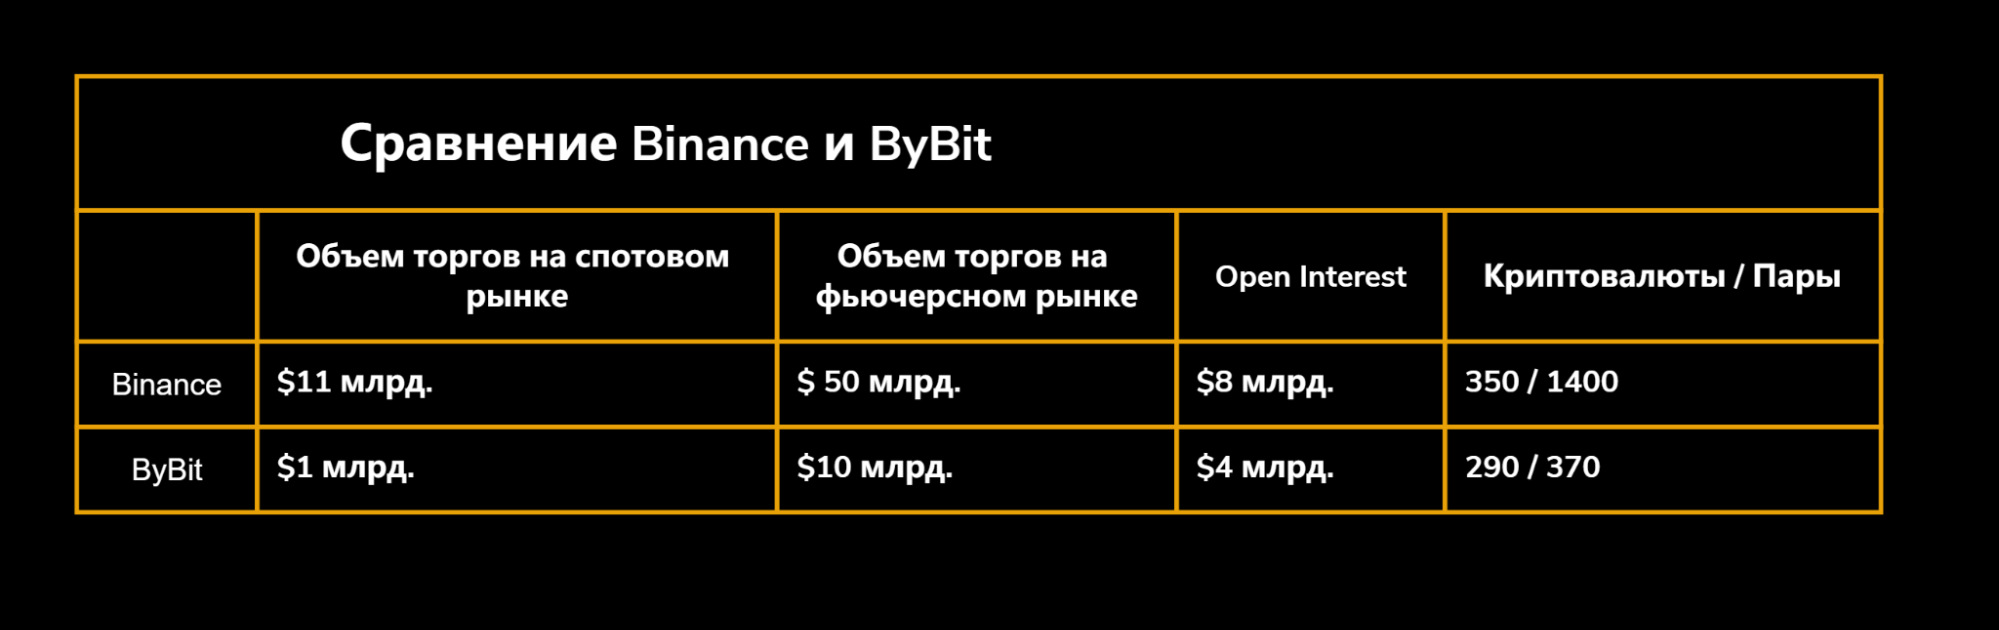 ByBit и Binance: сравнение по рынкам и инструментам, Binance или Bybit